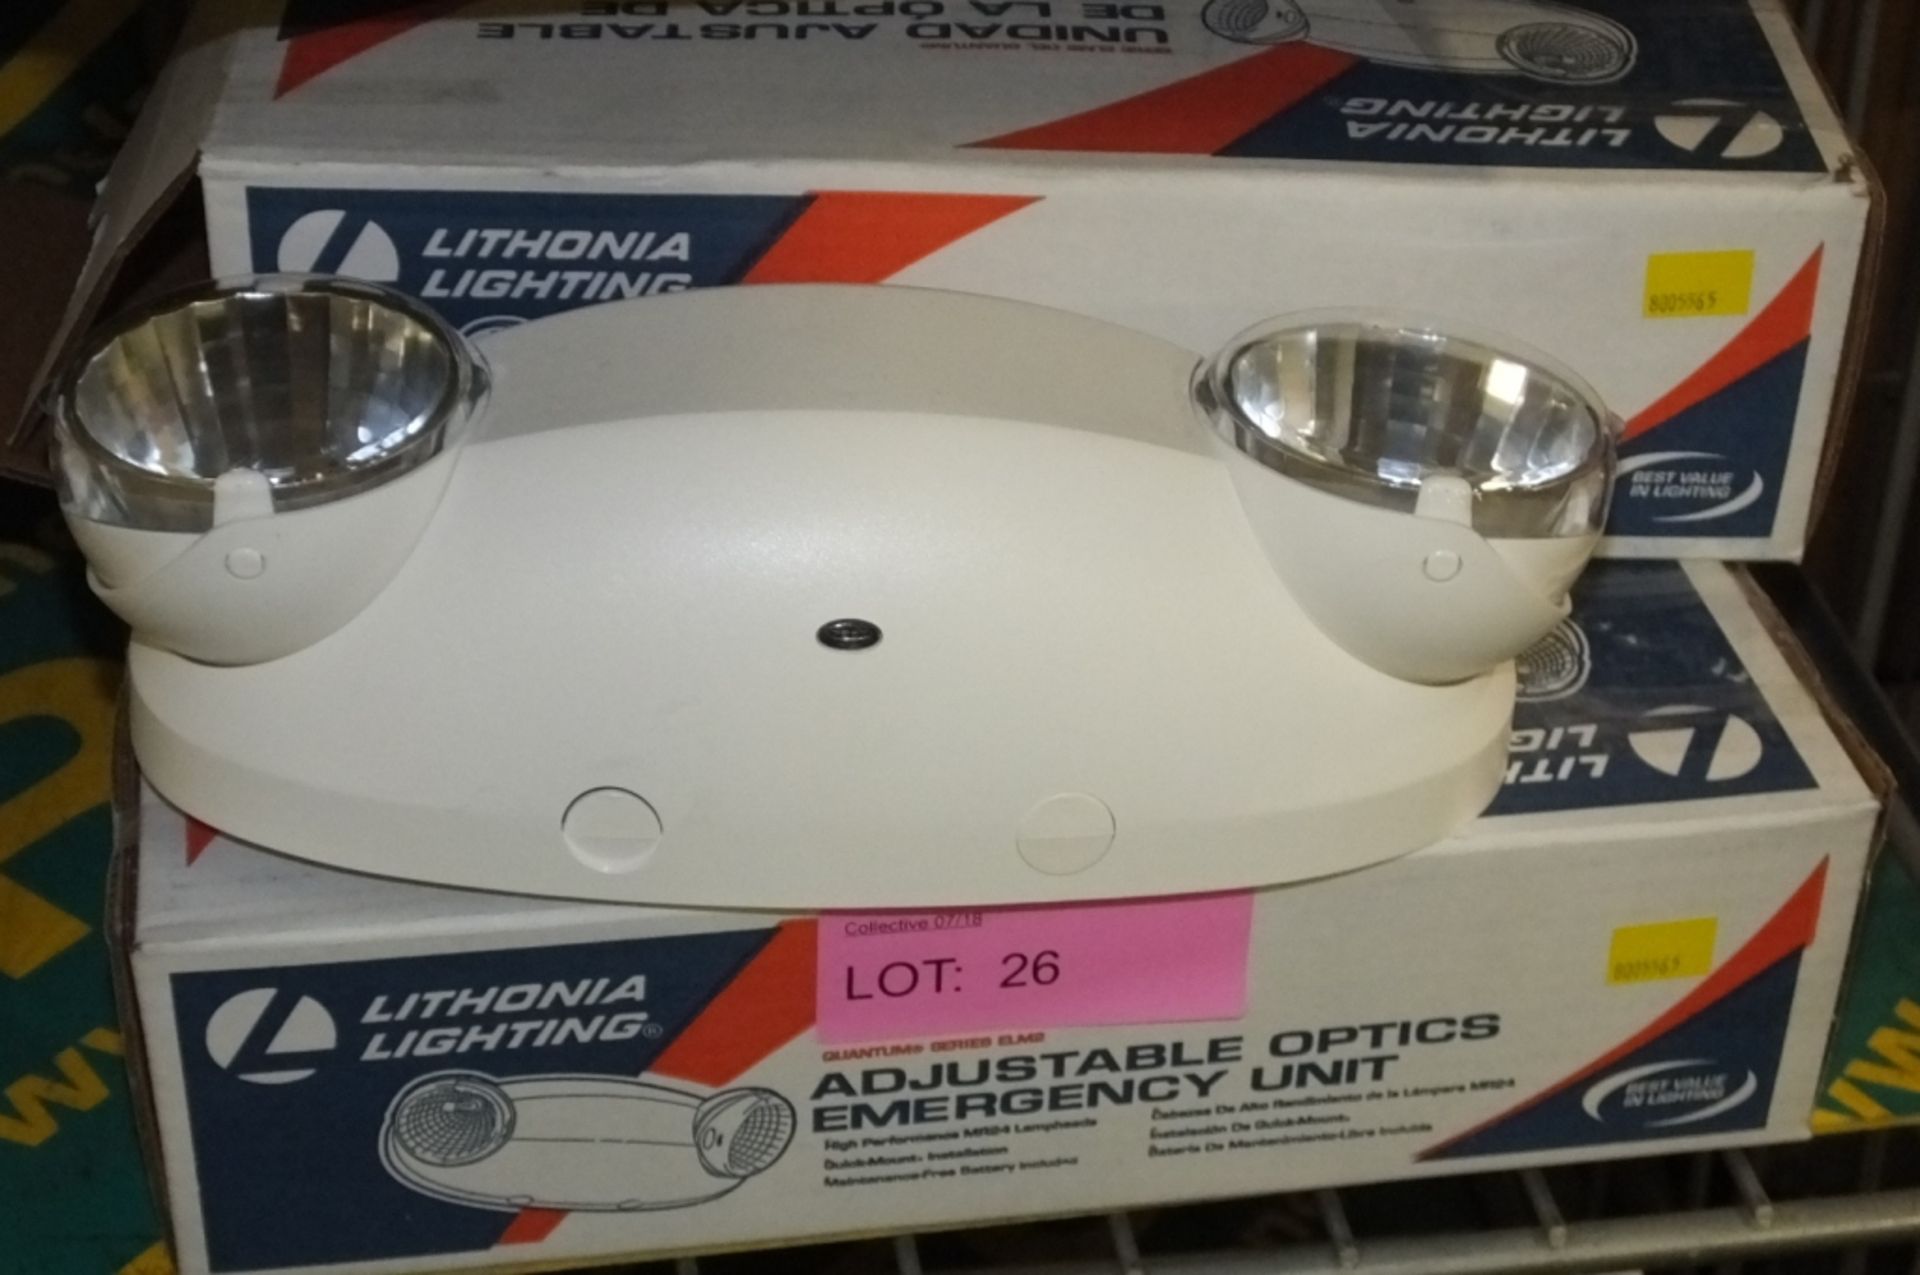 3x Lithonia Lighting Adjustable Optics Emergency LIghting units - Bild 3 aus 3